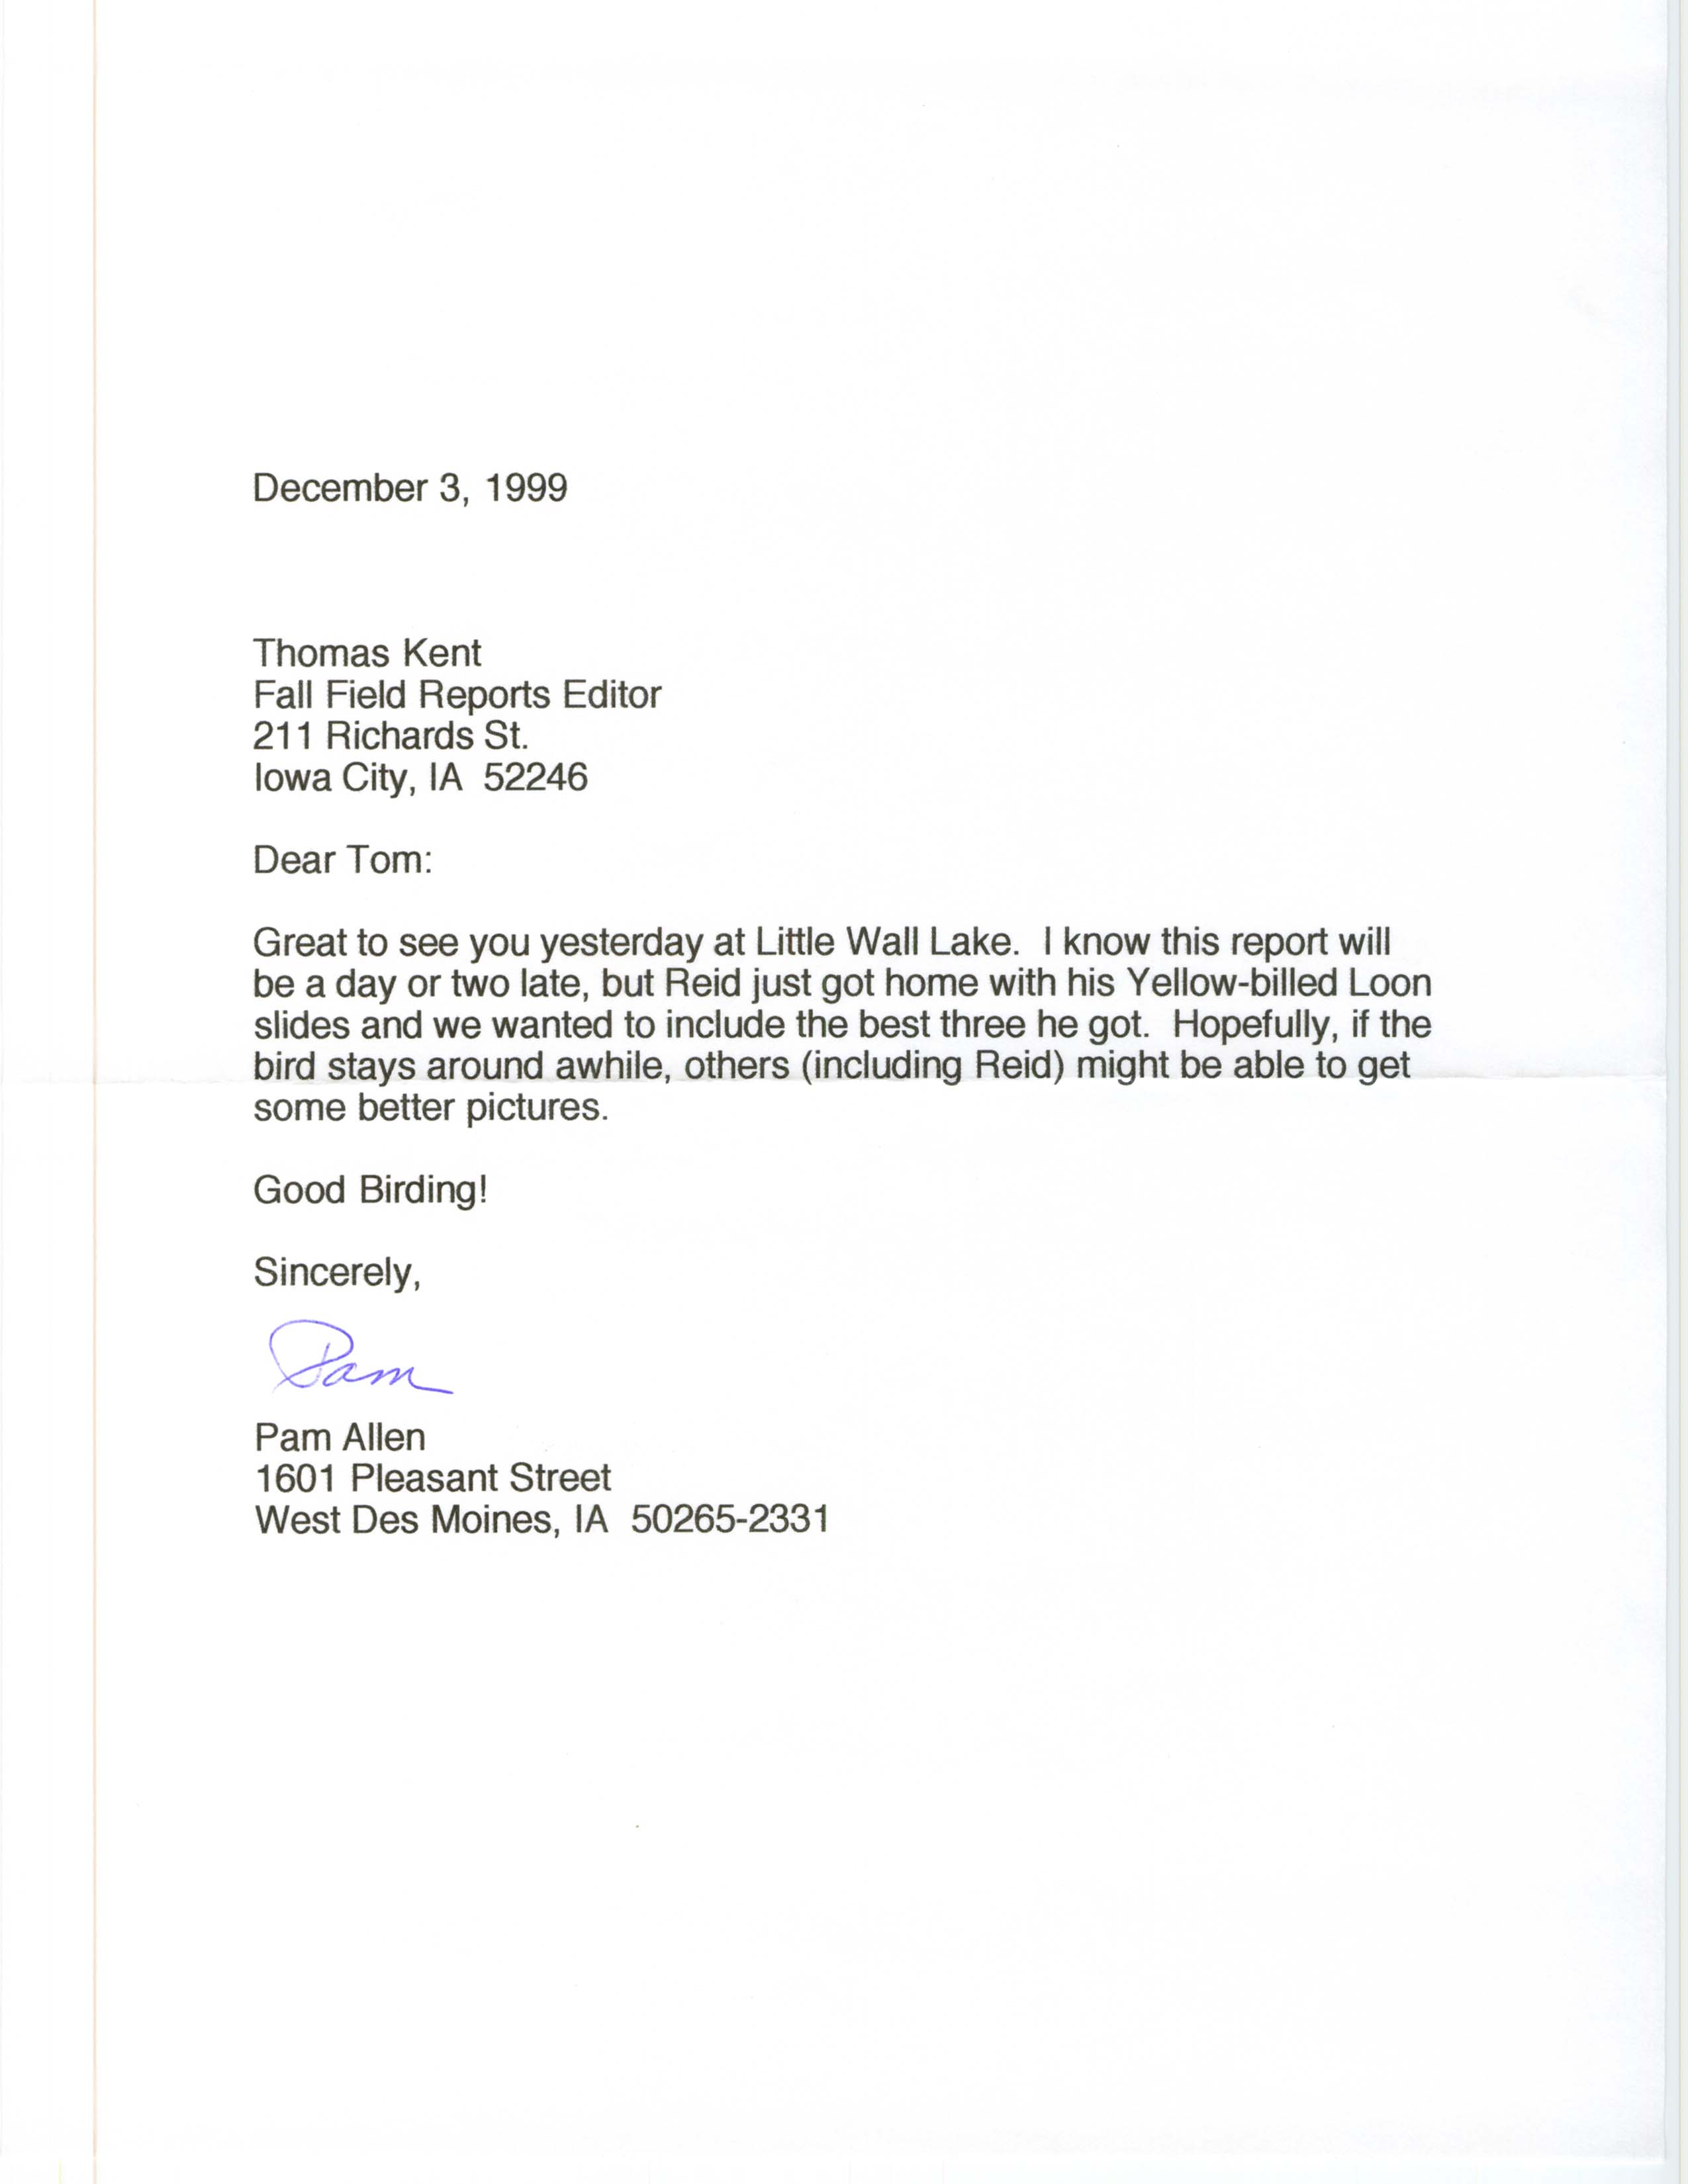 Pam Allen letter to Thomas Kent regarding Yellow-billed Loon slides, December 3, 1999